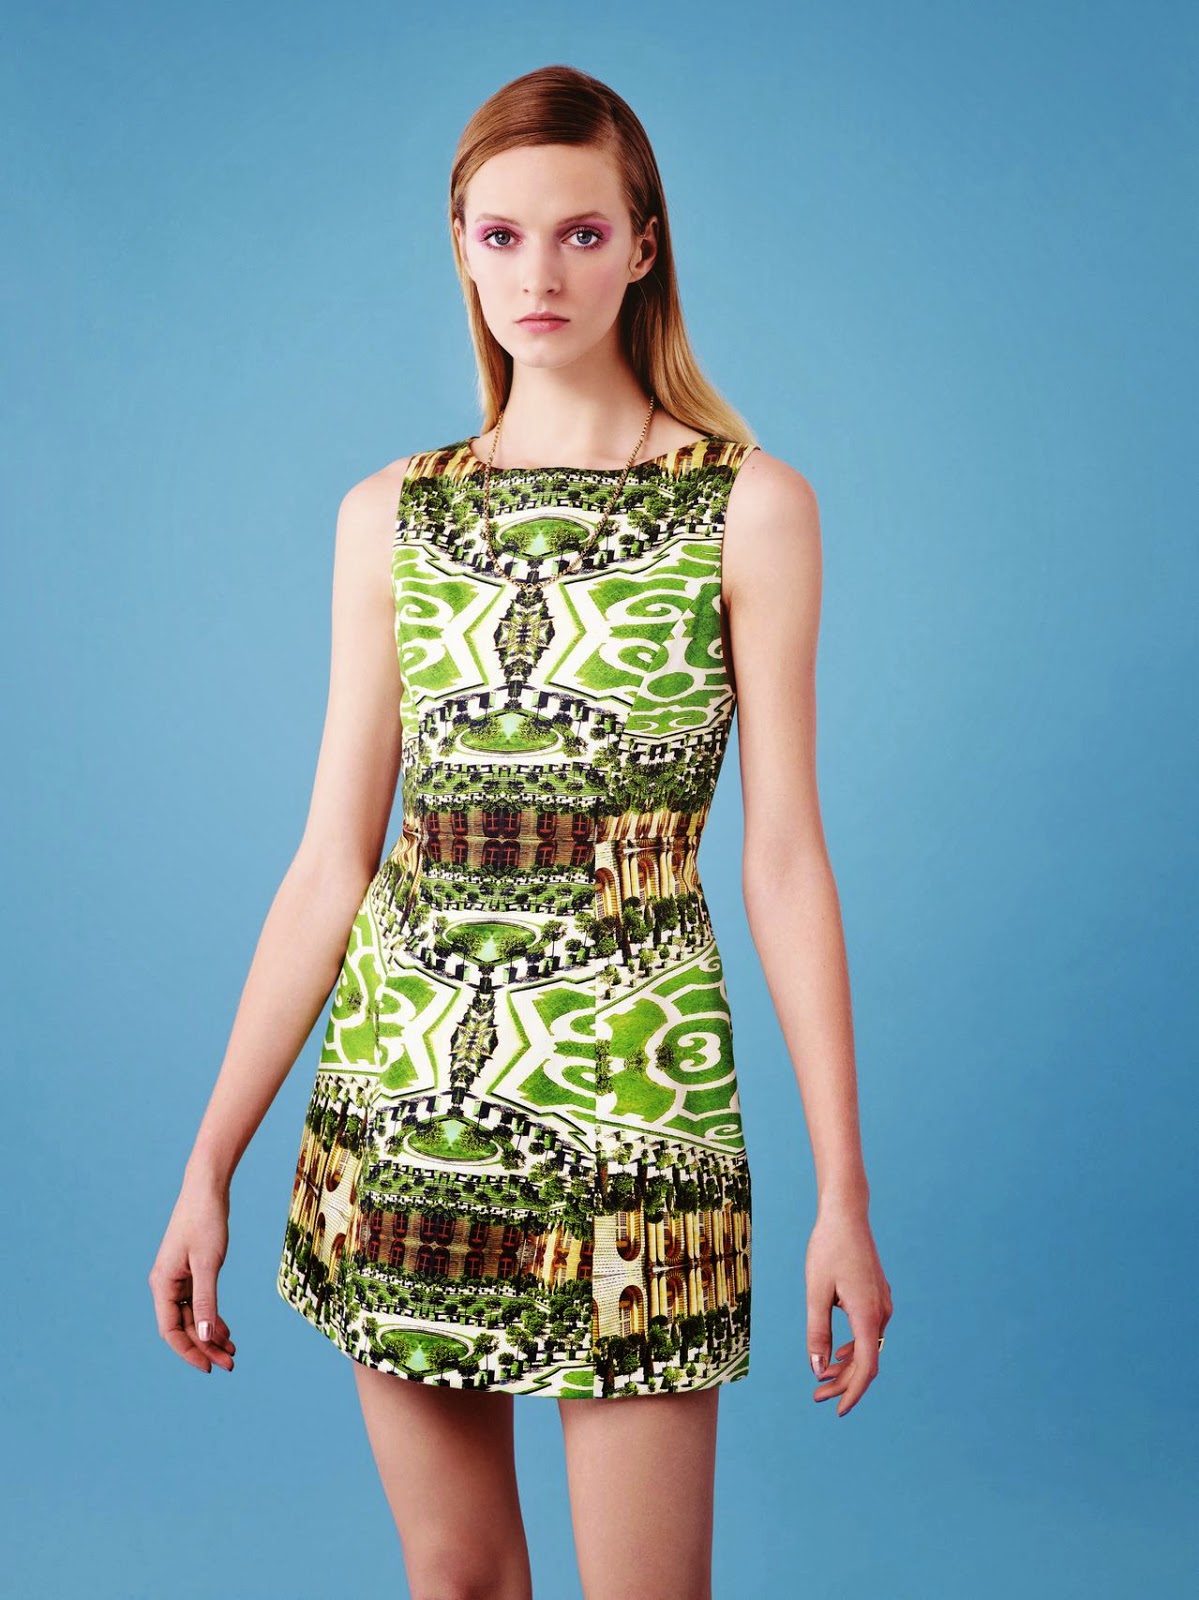 Duchess Dior: Daria Strokous by Johan Sandberg for Bergdorf Goodman ...